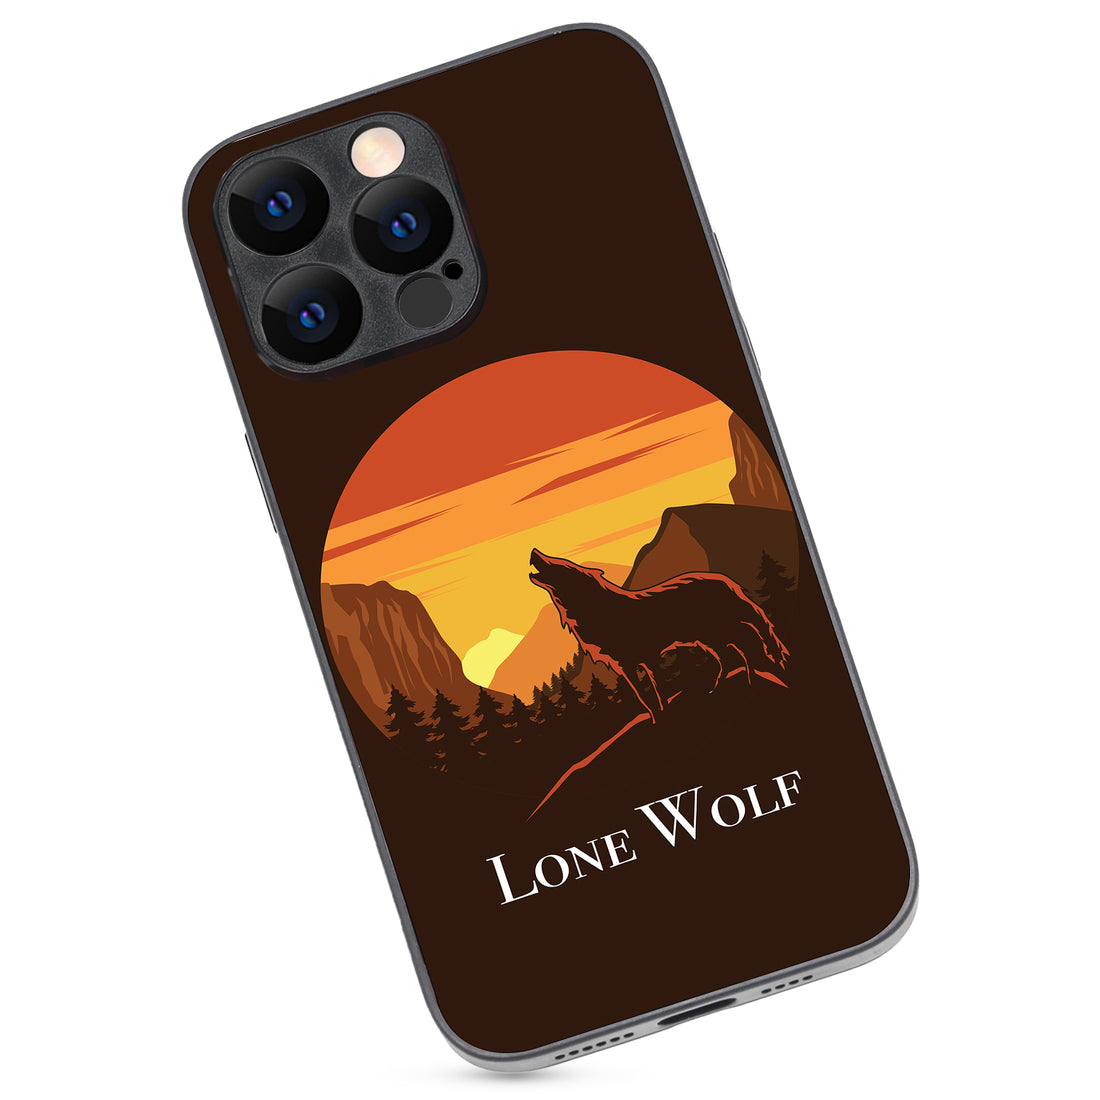 Lone Wolf Cartoon iPhone 14 Pro Max Case